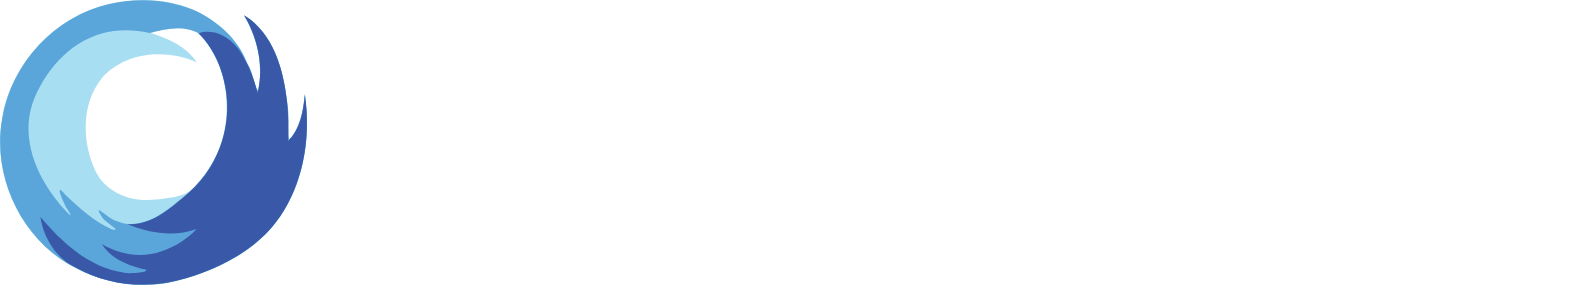 Pure Cycle (water) logo grand pour les fonds sombres (PNG transparent)